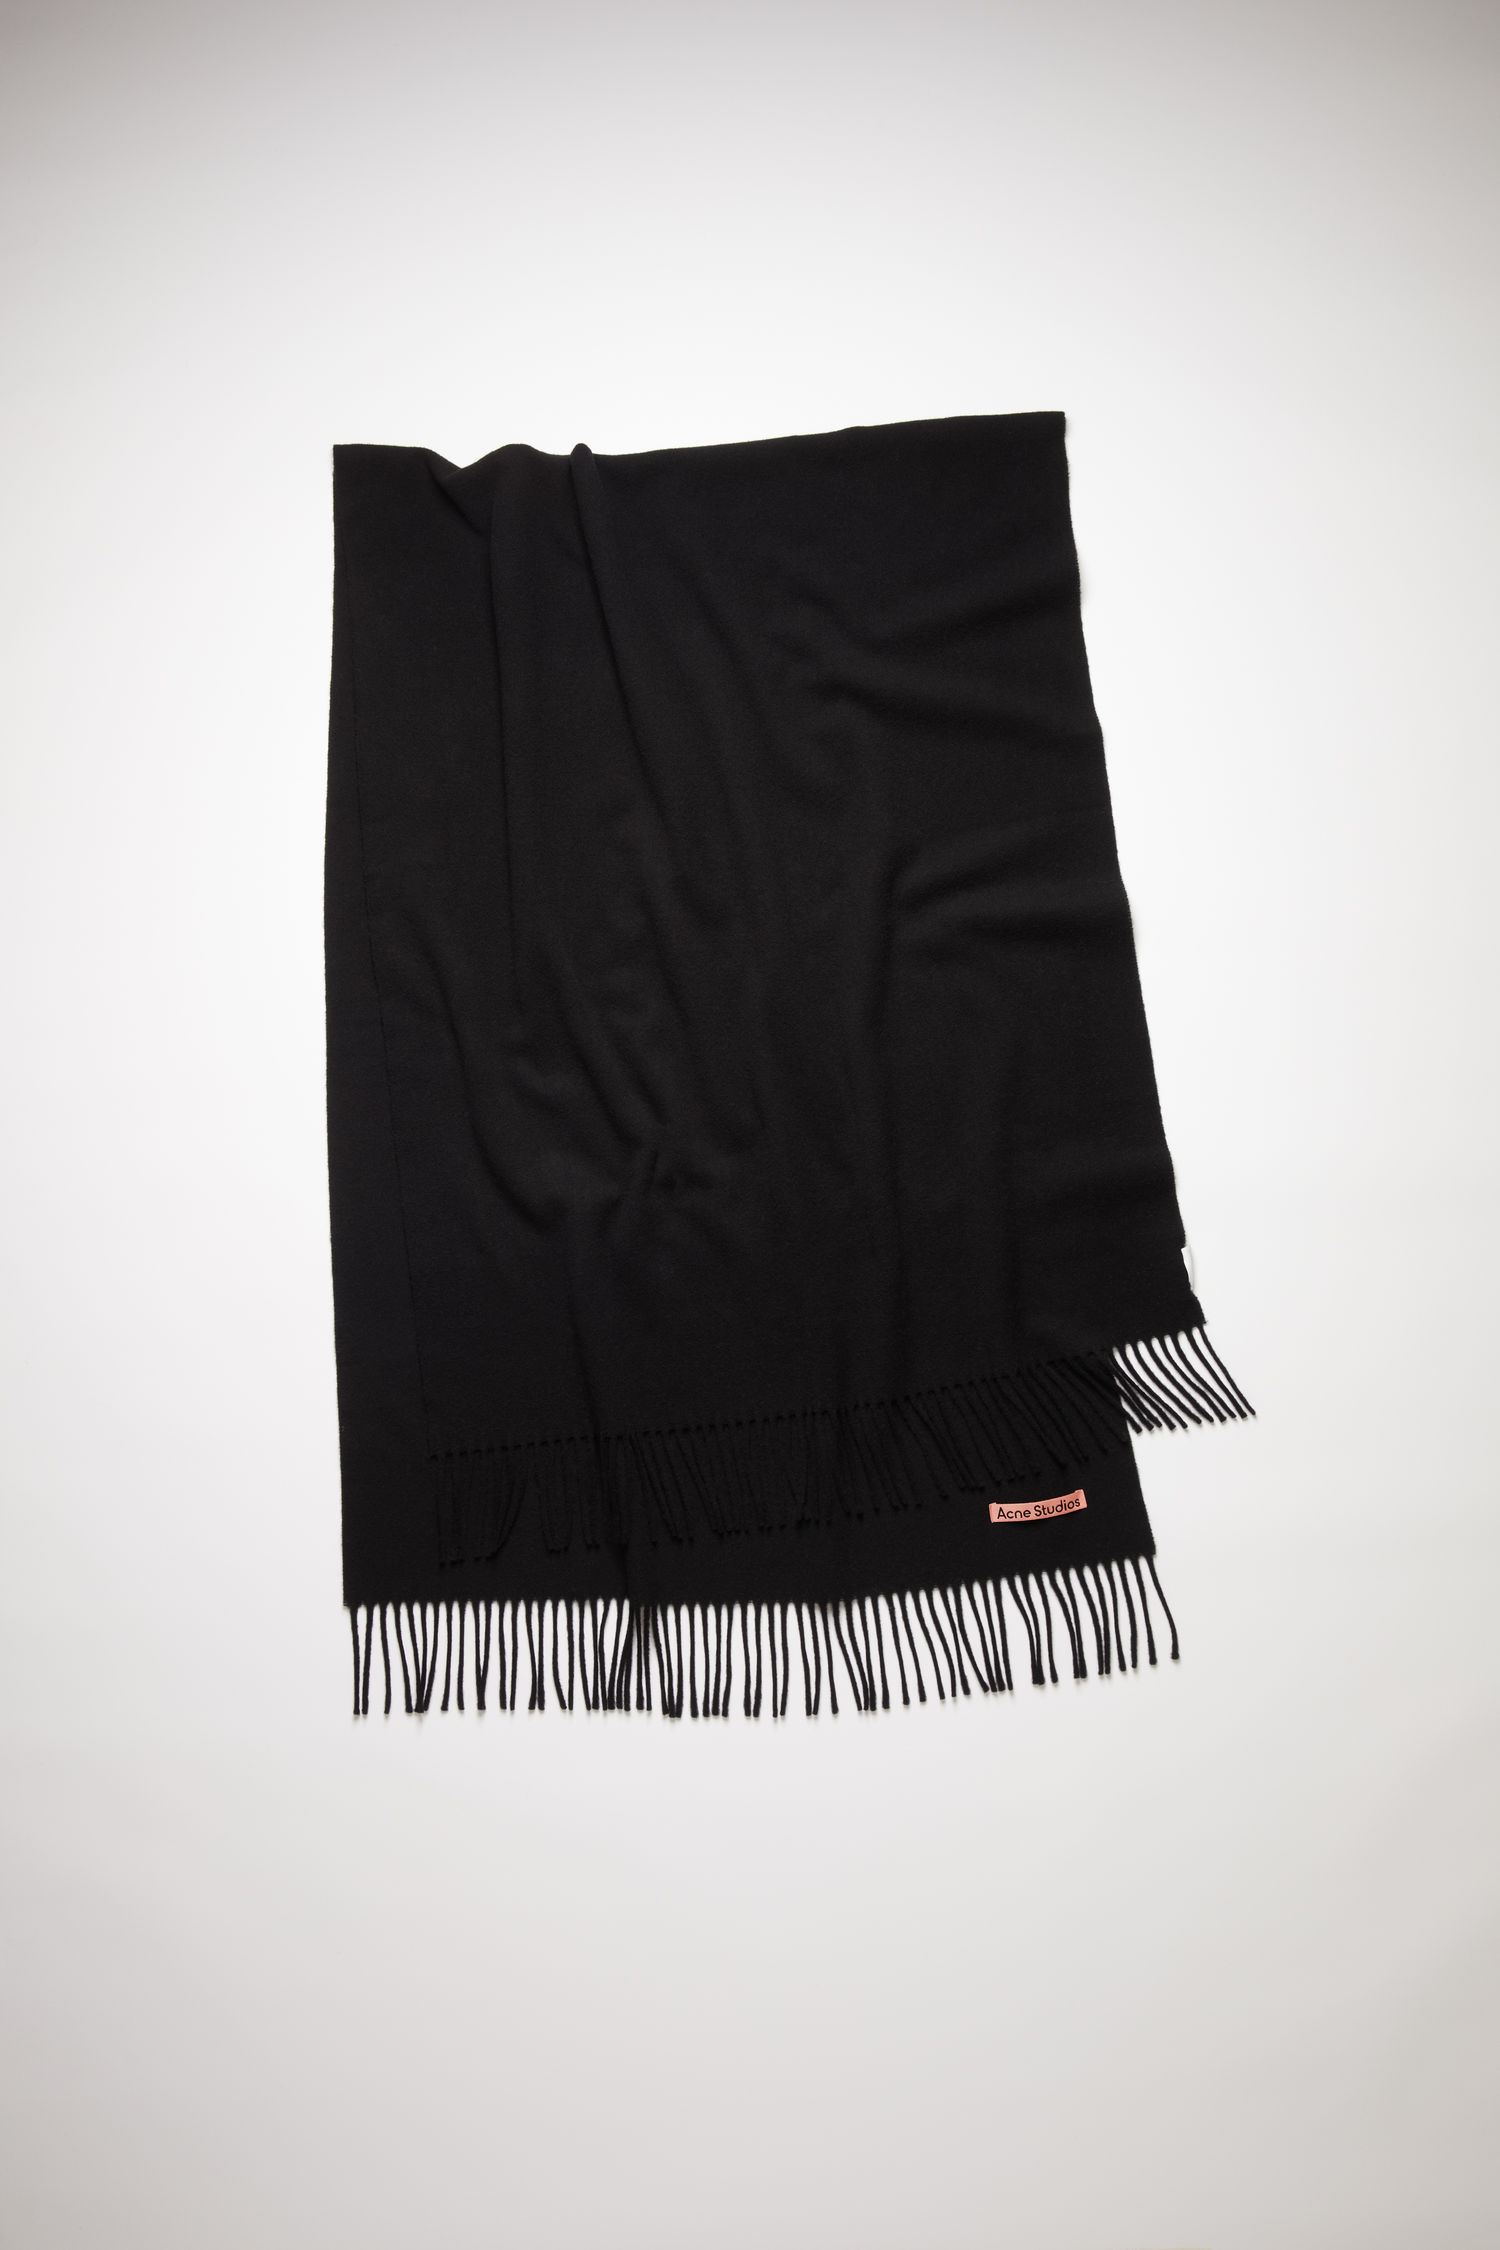 Company musical calf Acne Studios - Oversized fringed wool scarf - Black